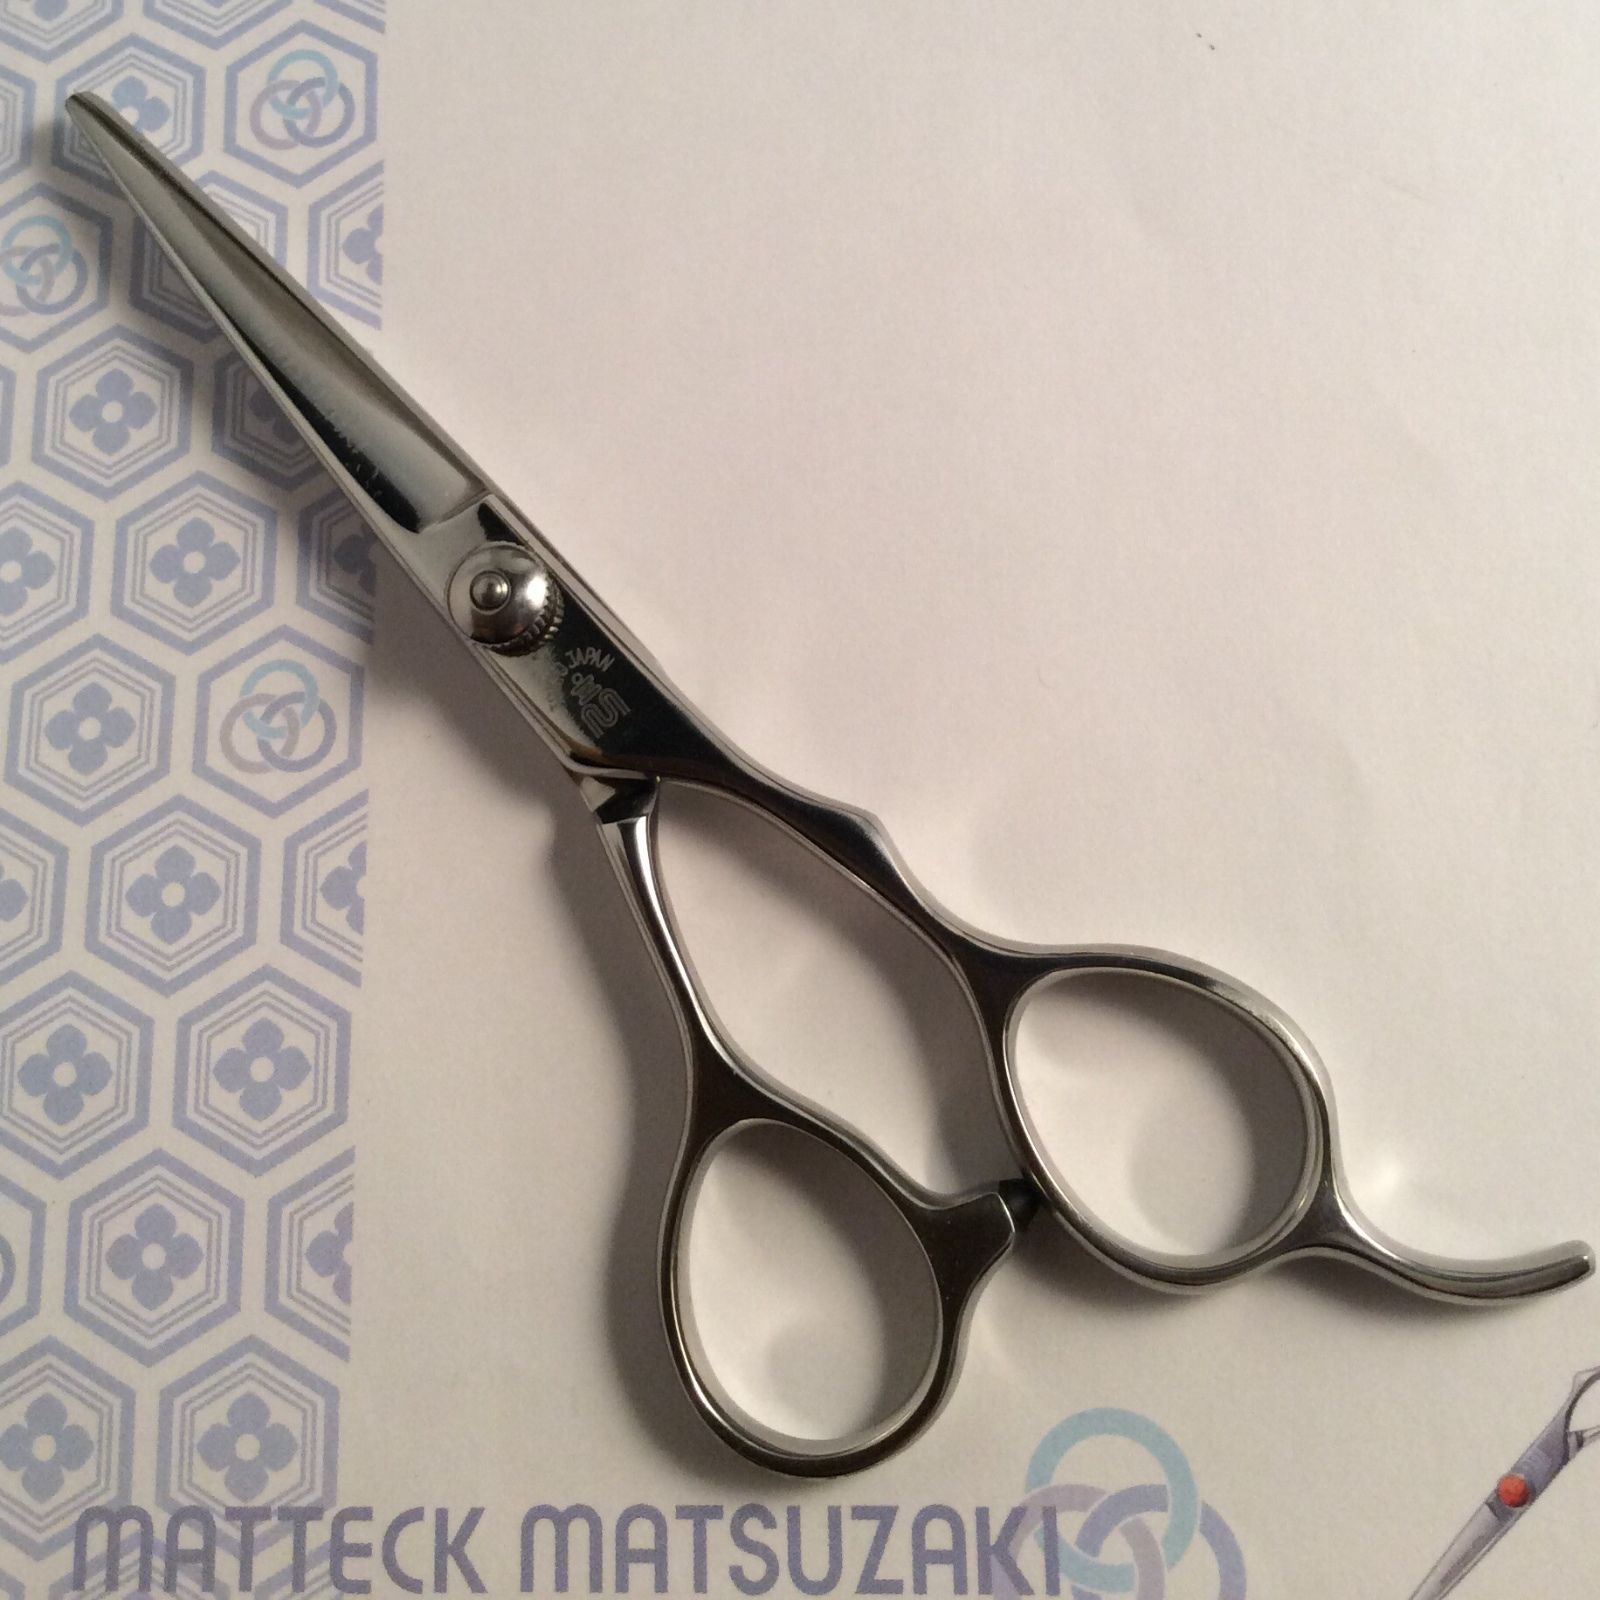 MATSUZAKI JAPAN HANDMADE ATK550 MM Stainless Scissors 5.5'UK￡550 ...